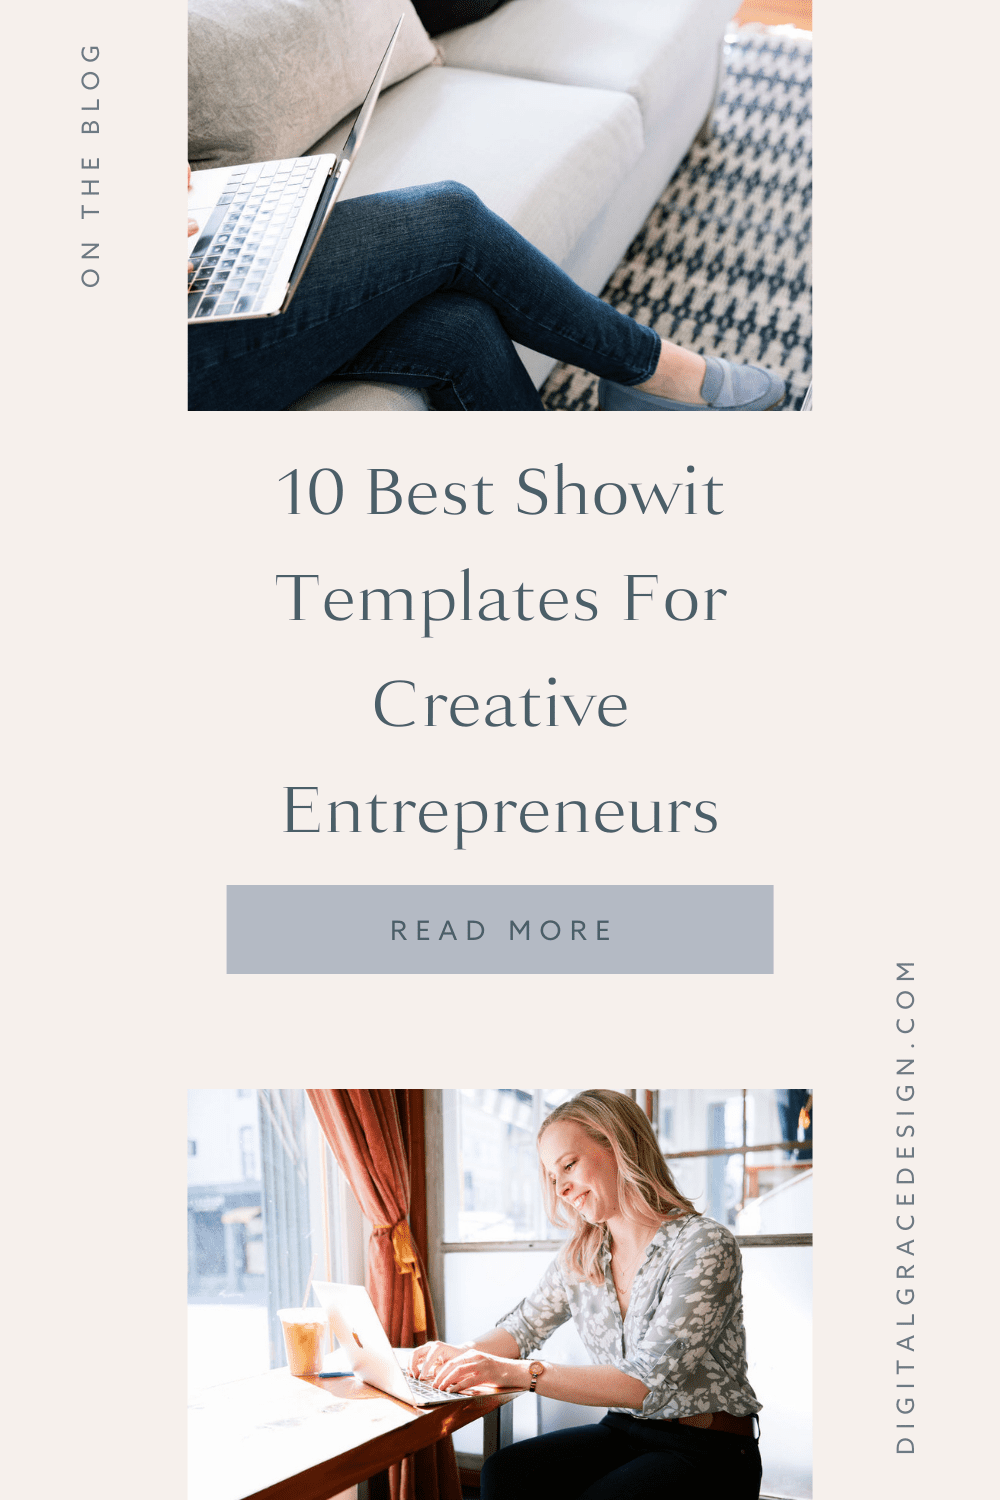 10 Best Showit Templates For Creative Entrepreneurs